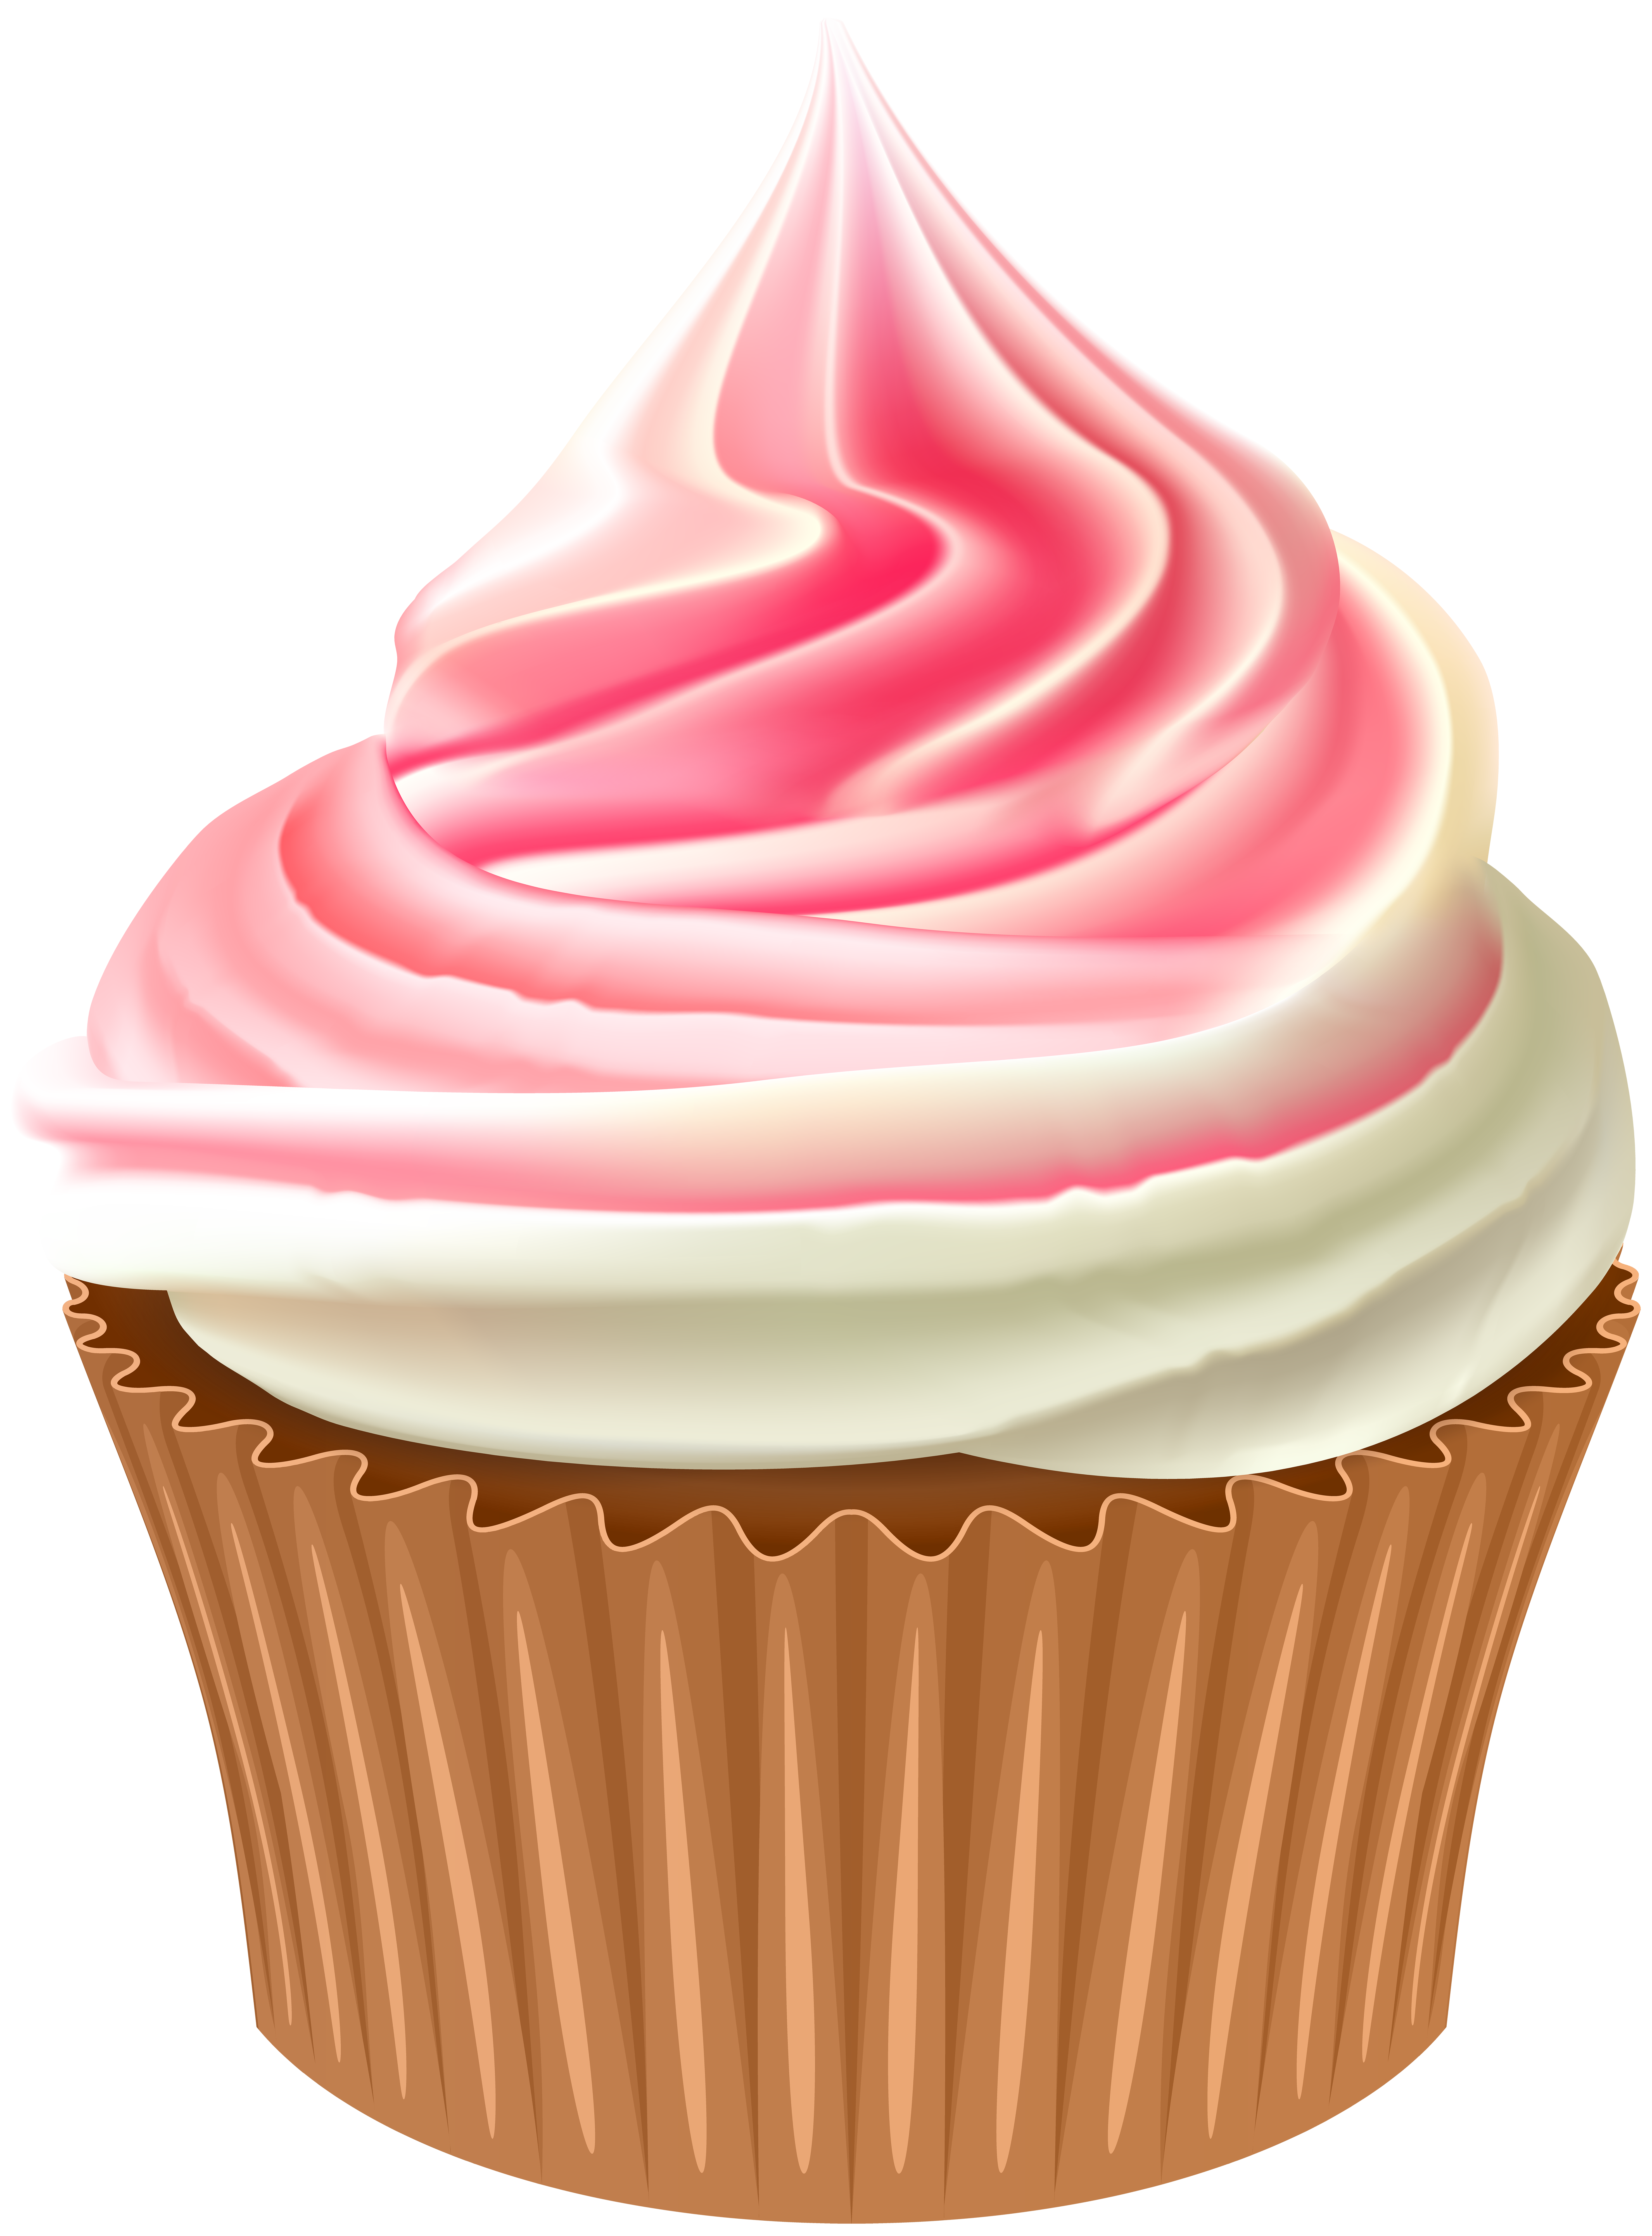 Cupcake Icing Illustration - Cupcake Transparent PNG Clip Art Image png